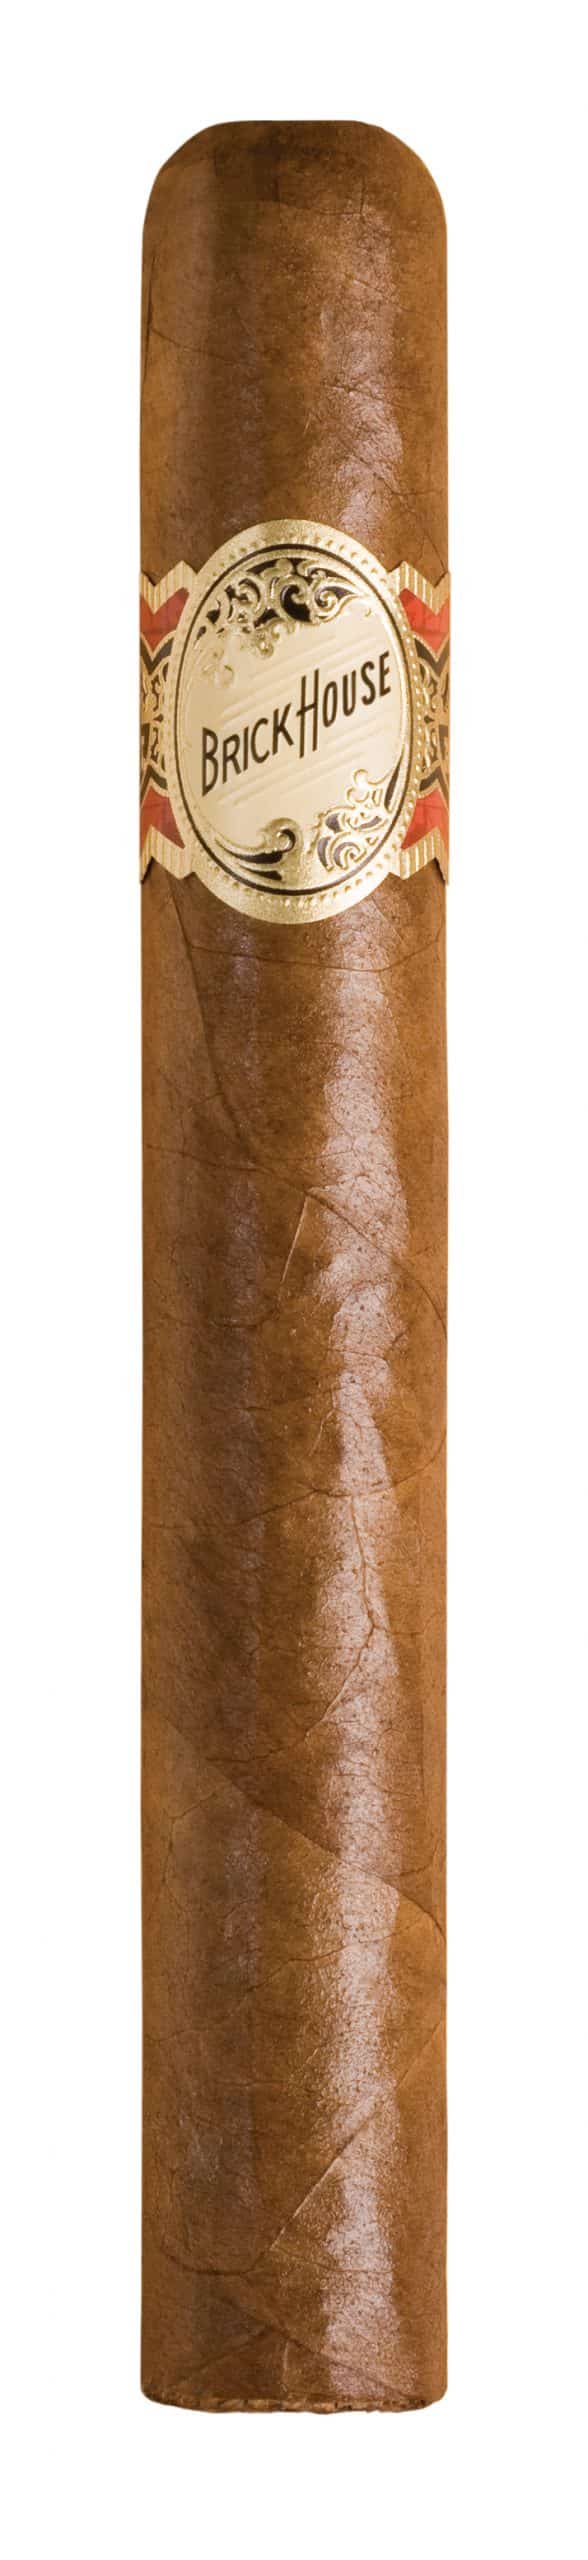 single brick house toro cigar